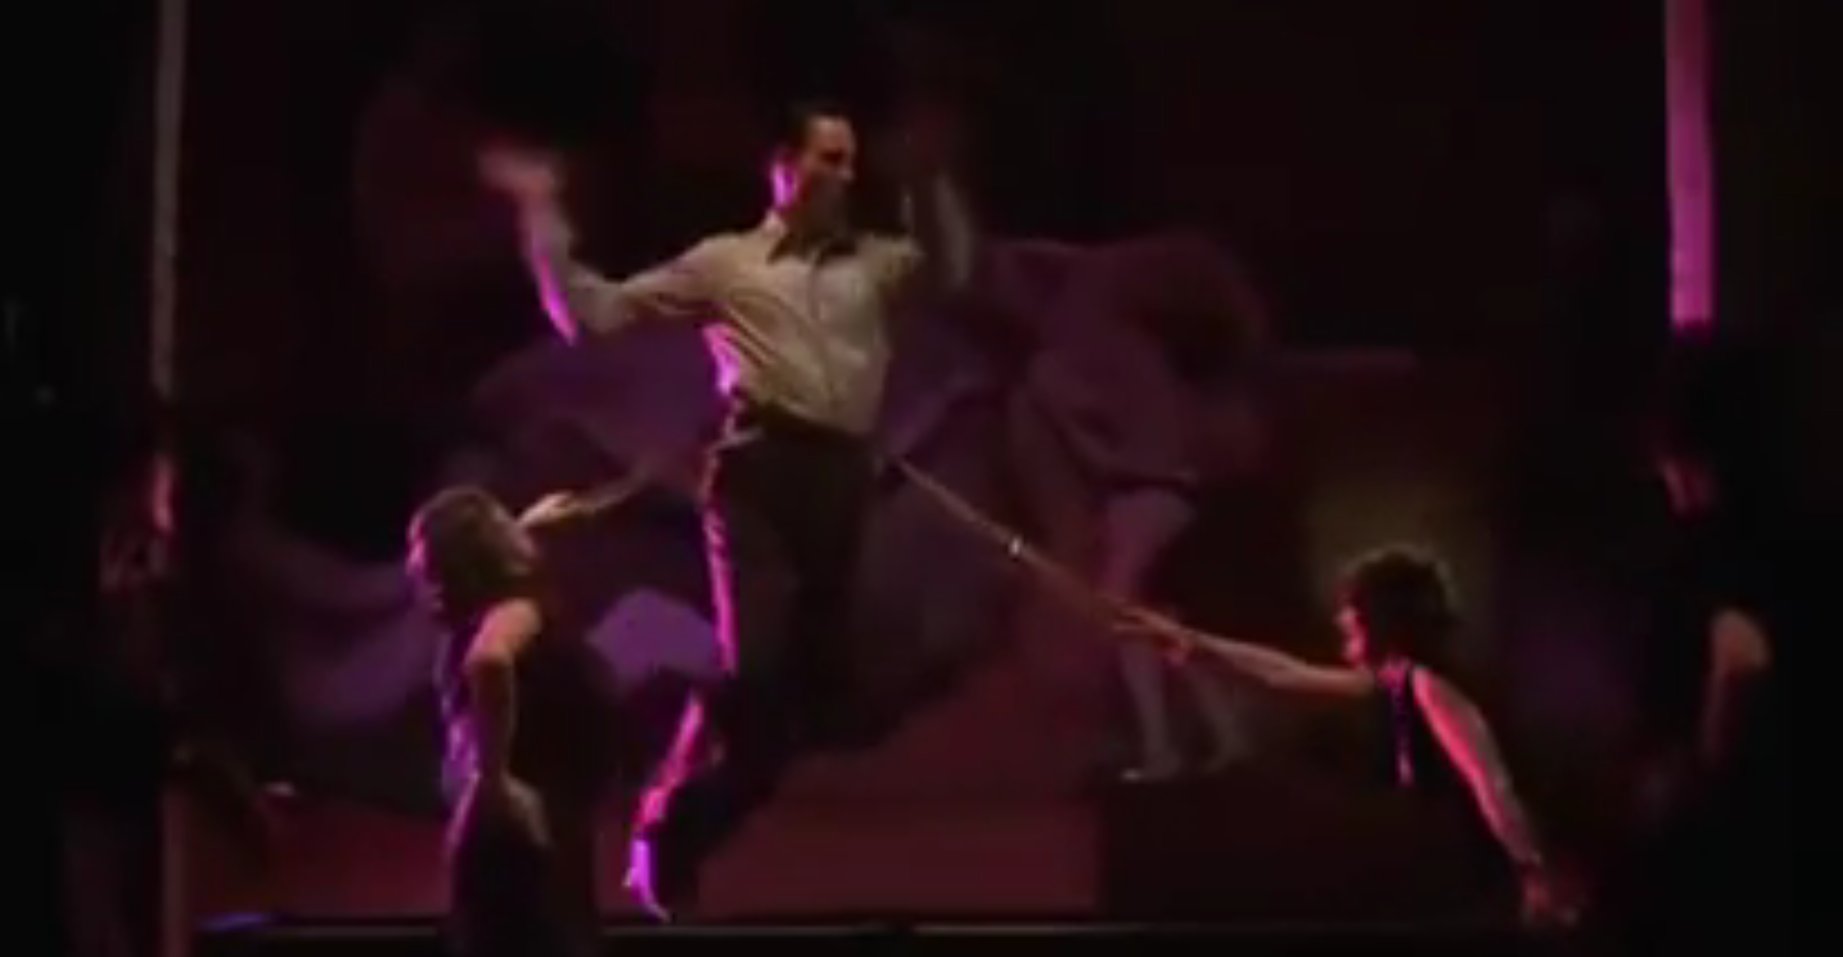 Fremmedgørelse tørre Uberettiget Matt Zoller Seitz on Twitter: "Here's Christopher Walken tapdancing in  PENNIES FROM HEAVEN. https://t.co/WlkQ5uHc69 https://t.co/jra4vcddzl" /  Twitter